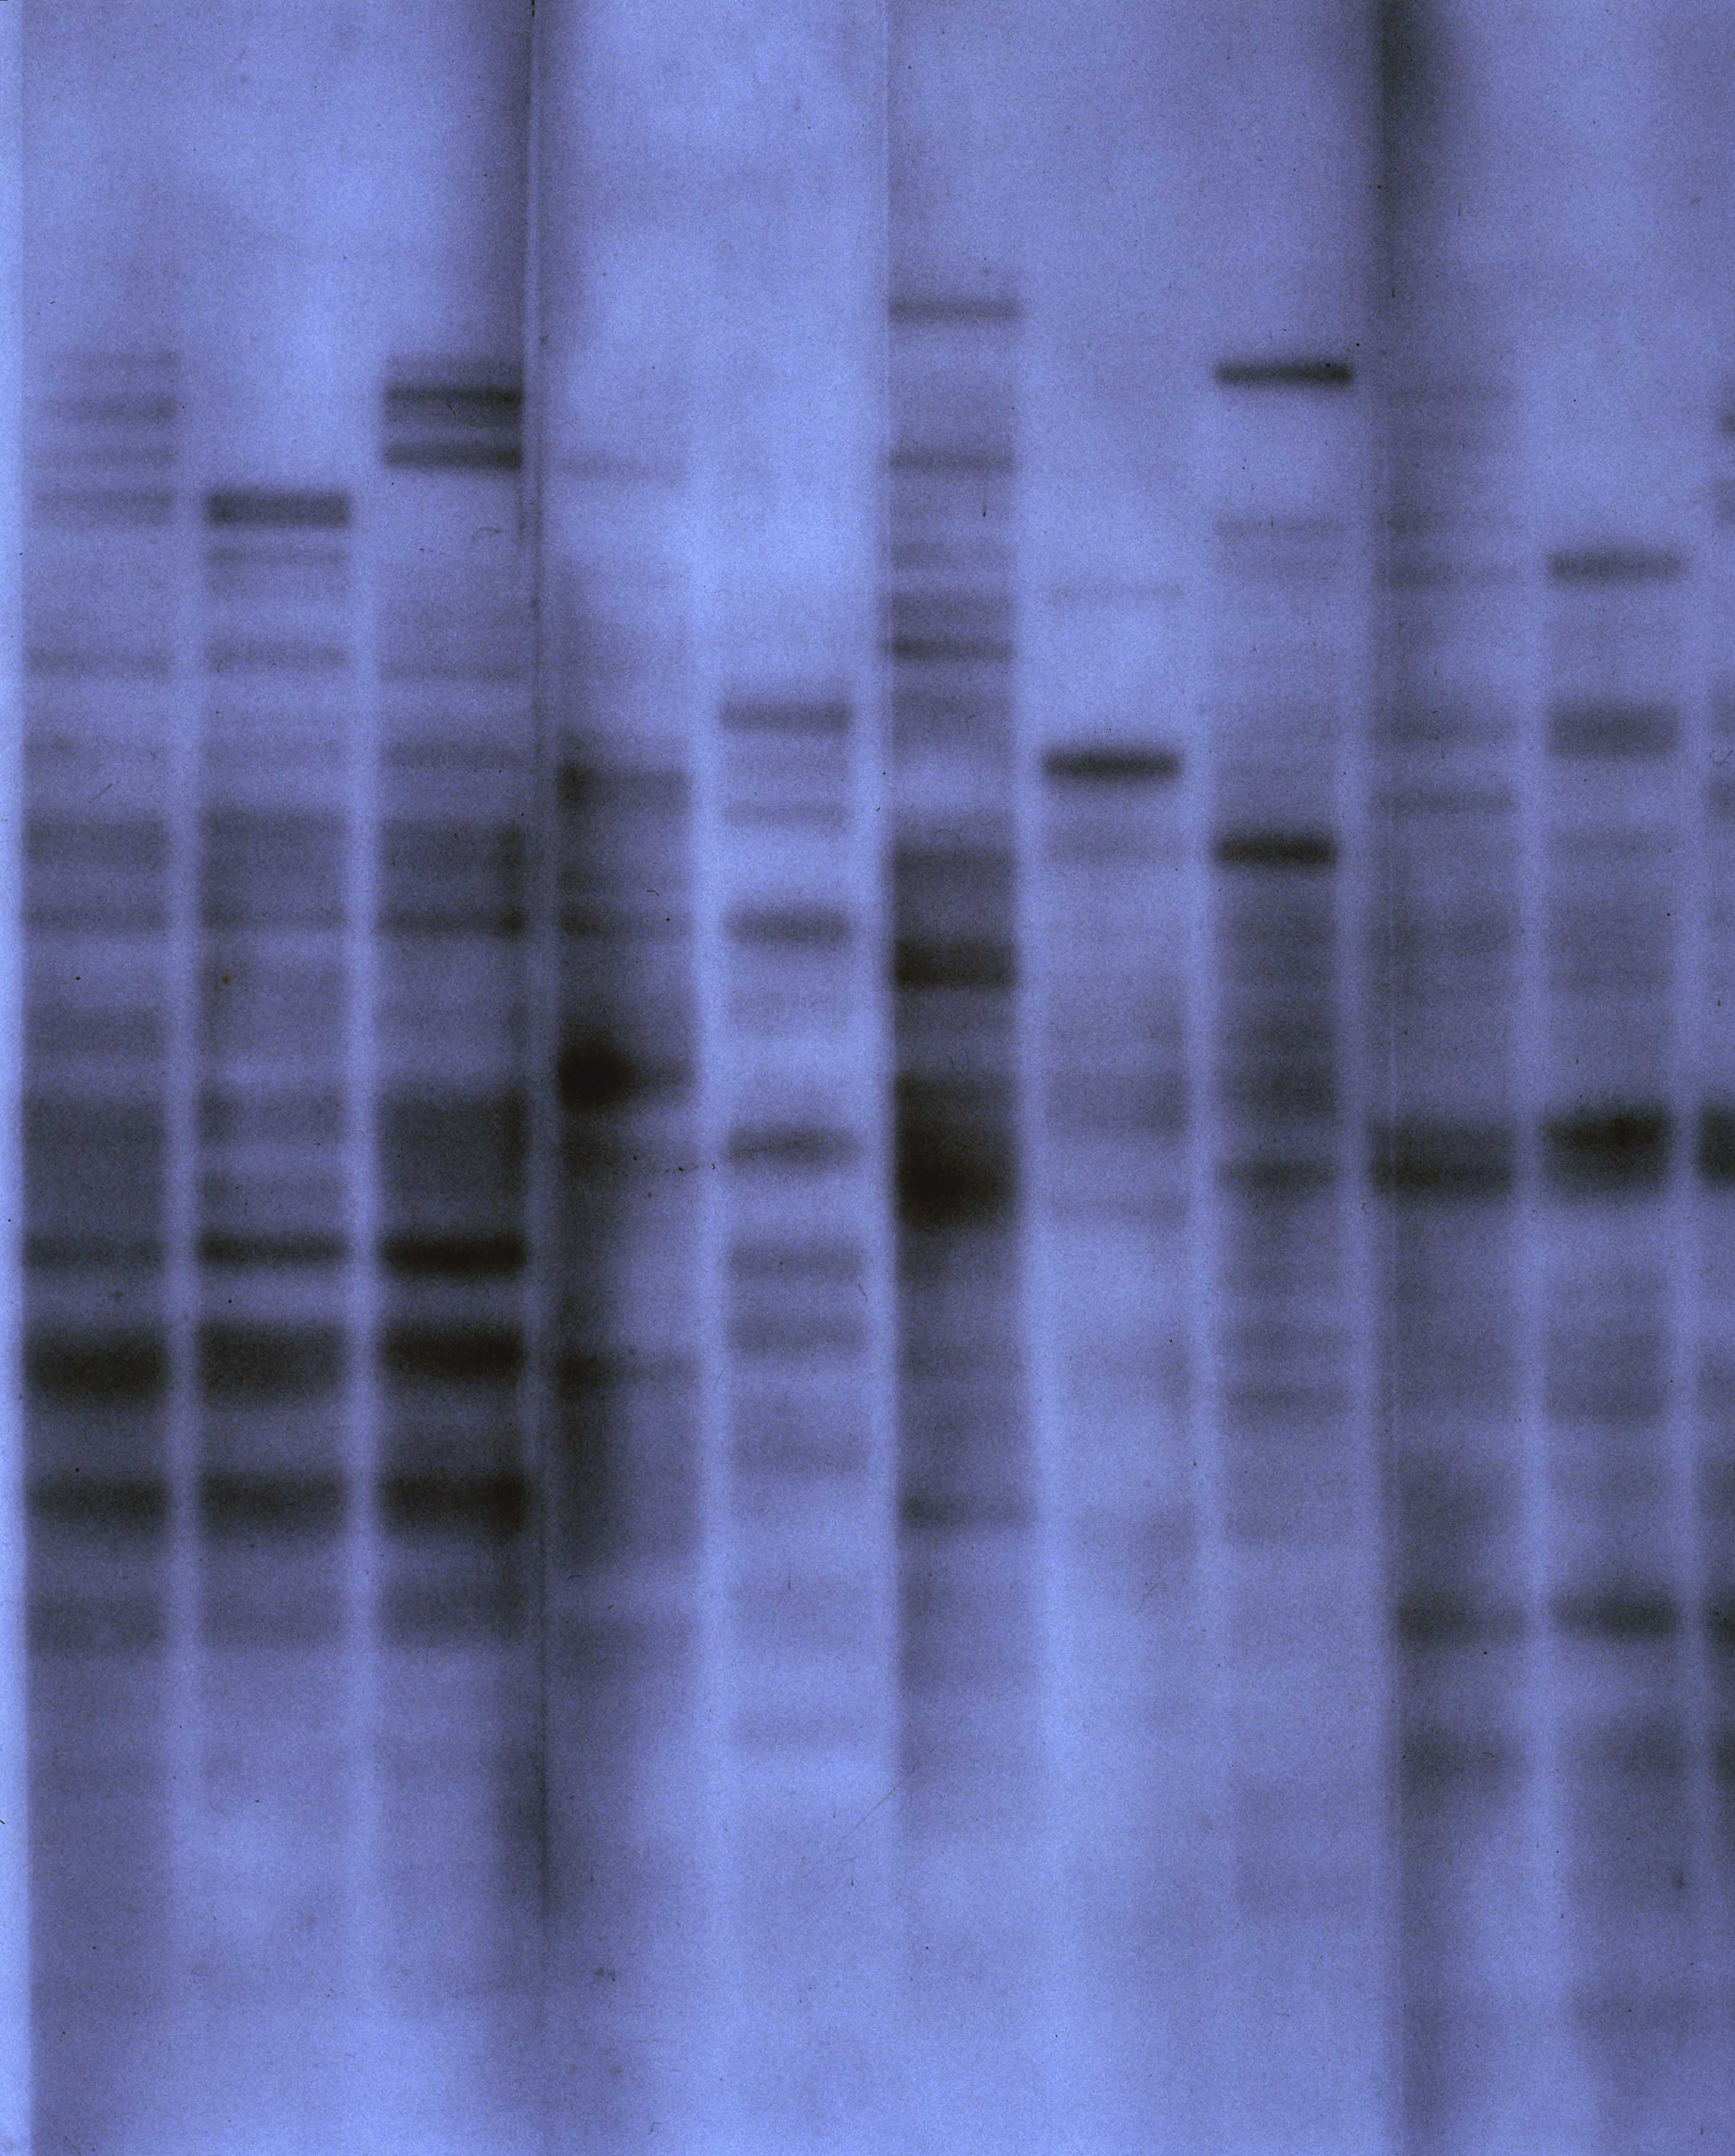 The first genetic fingerprint, 1984 © Science Museum / SSPL